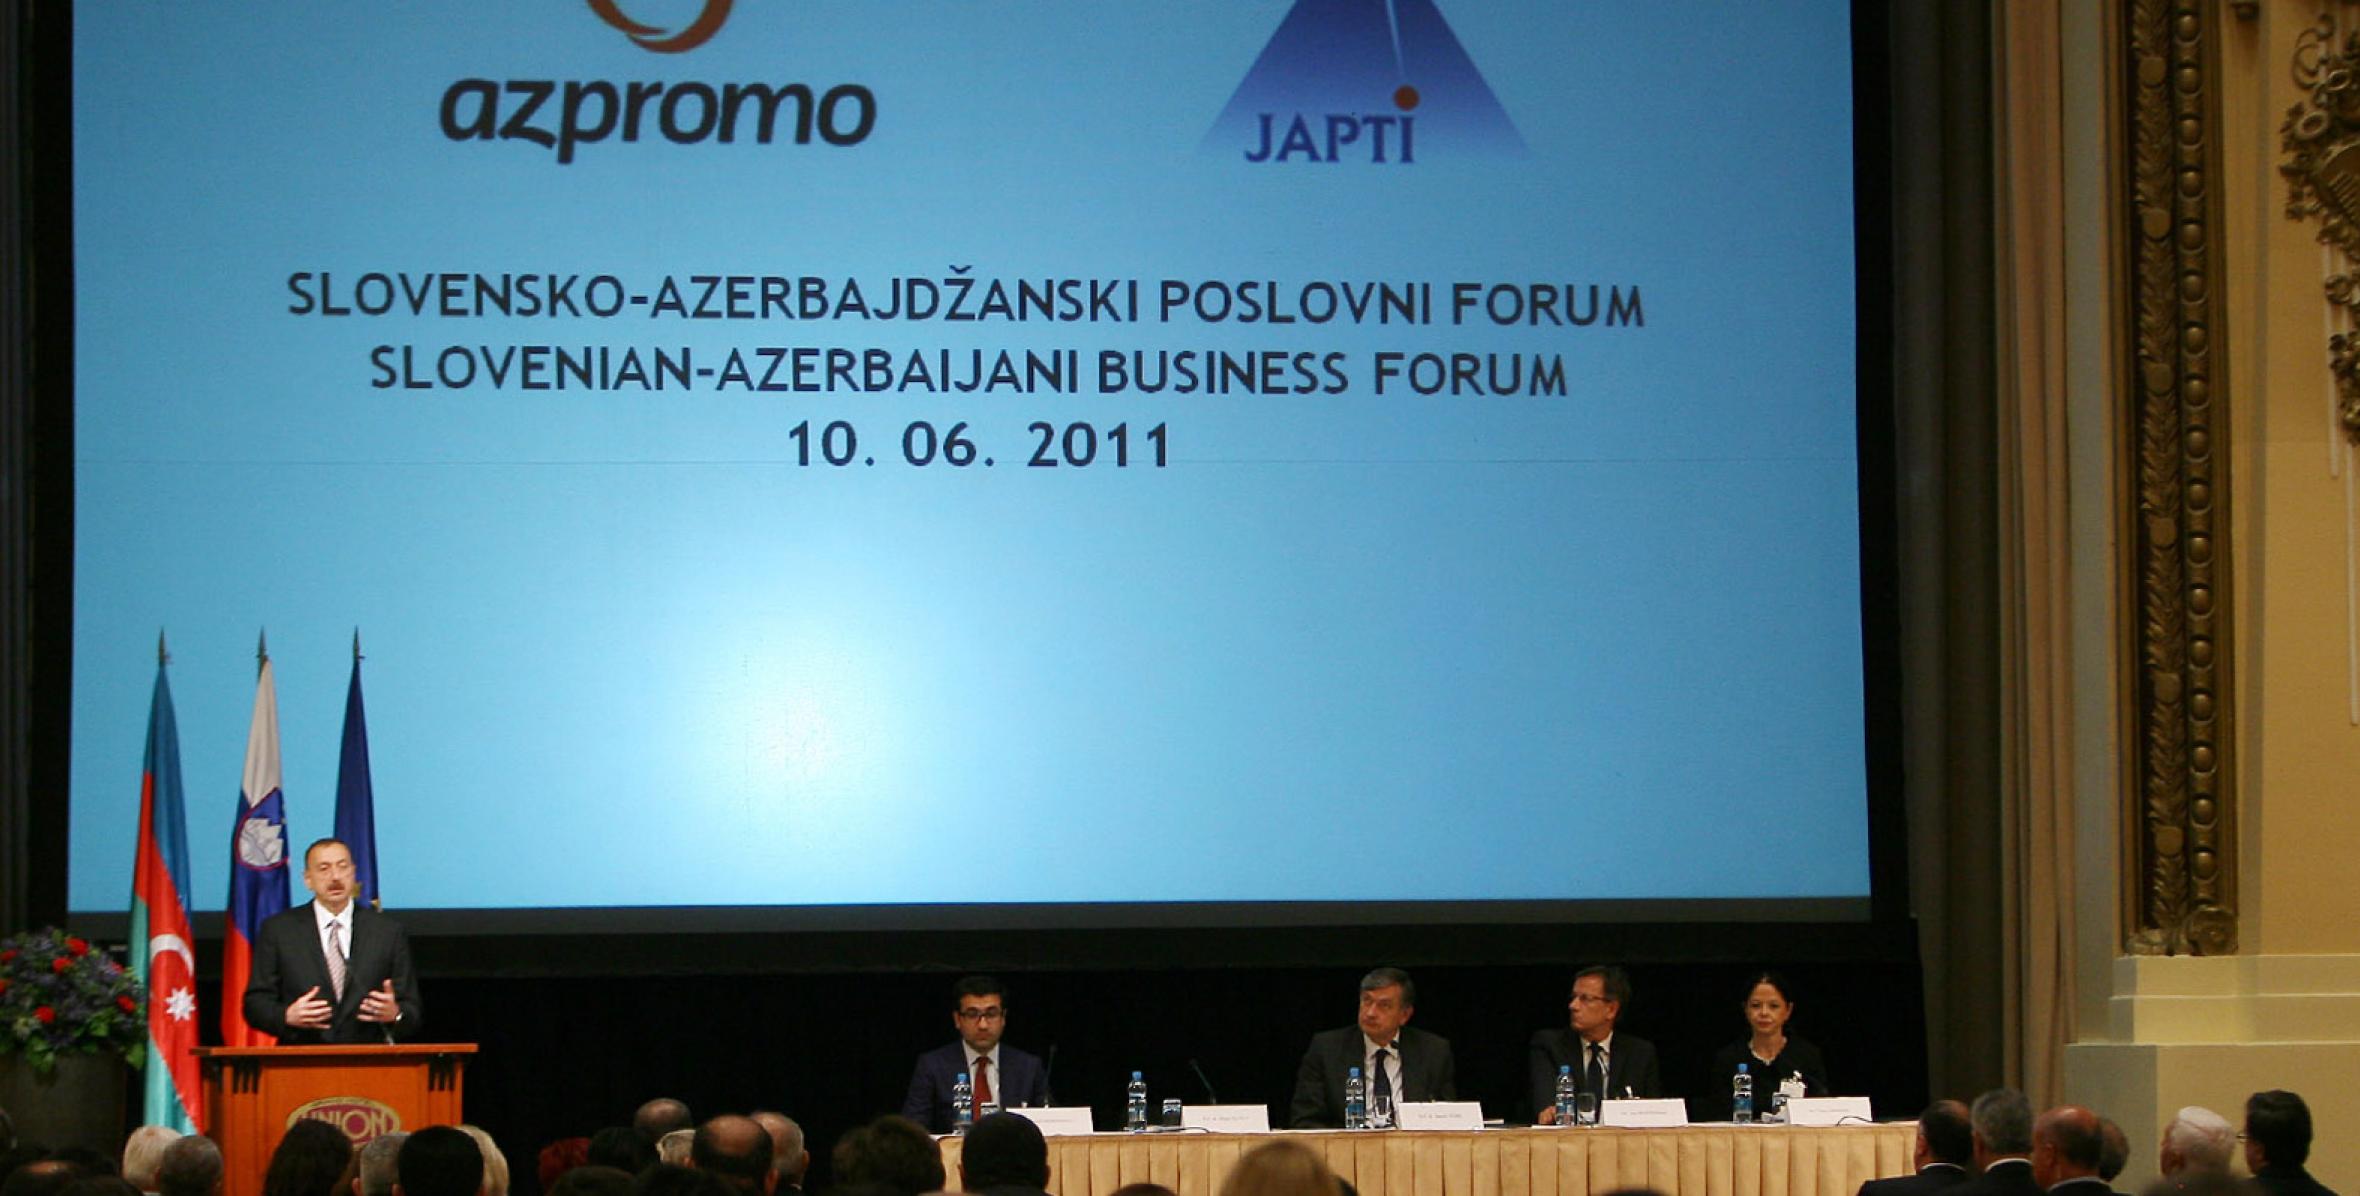 Azerbaijani-Slovenian Business Forum was held